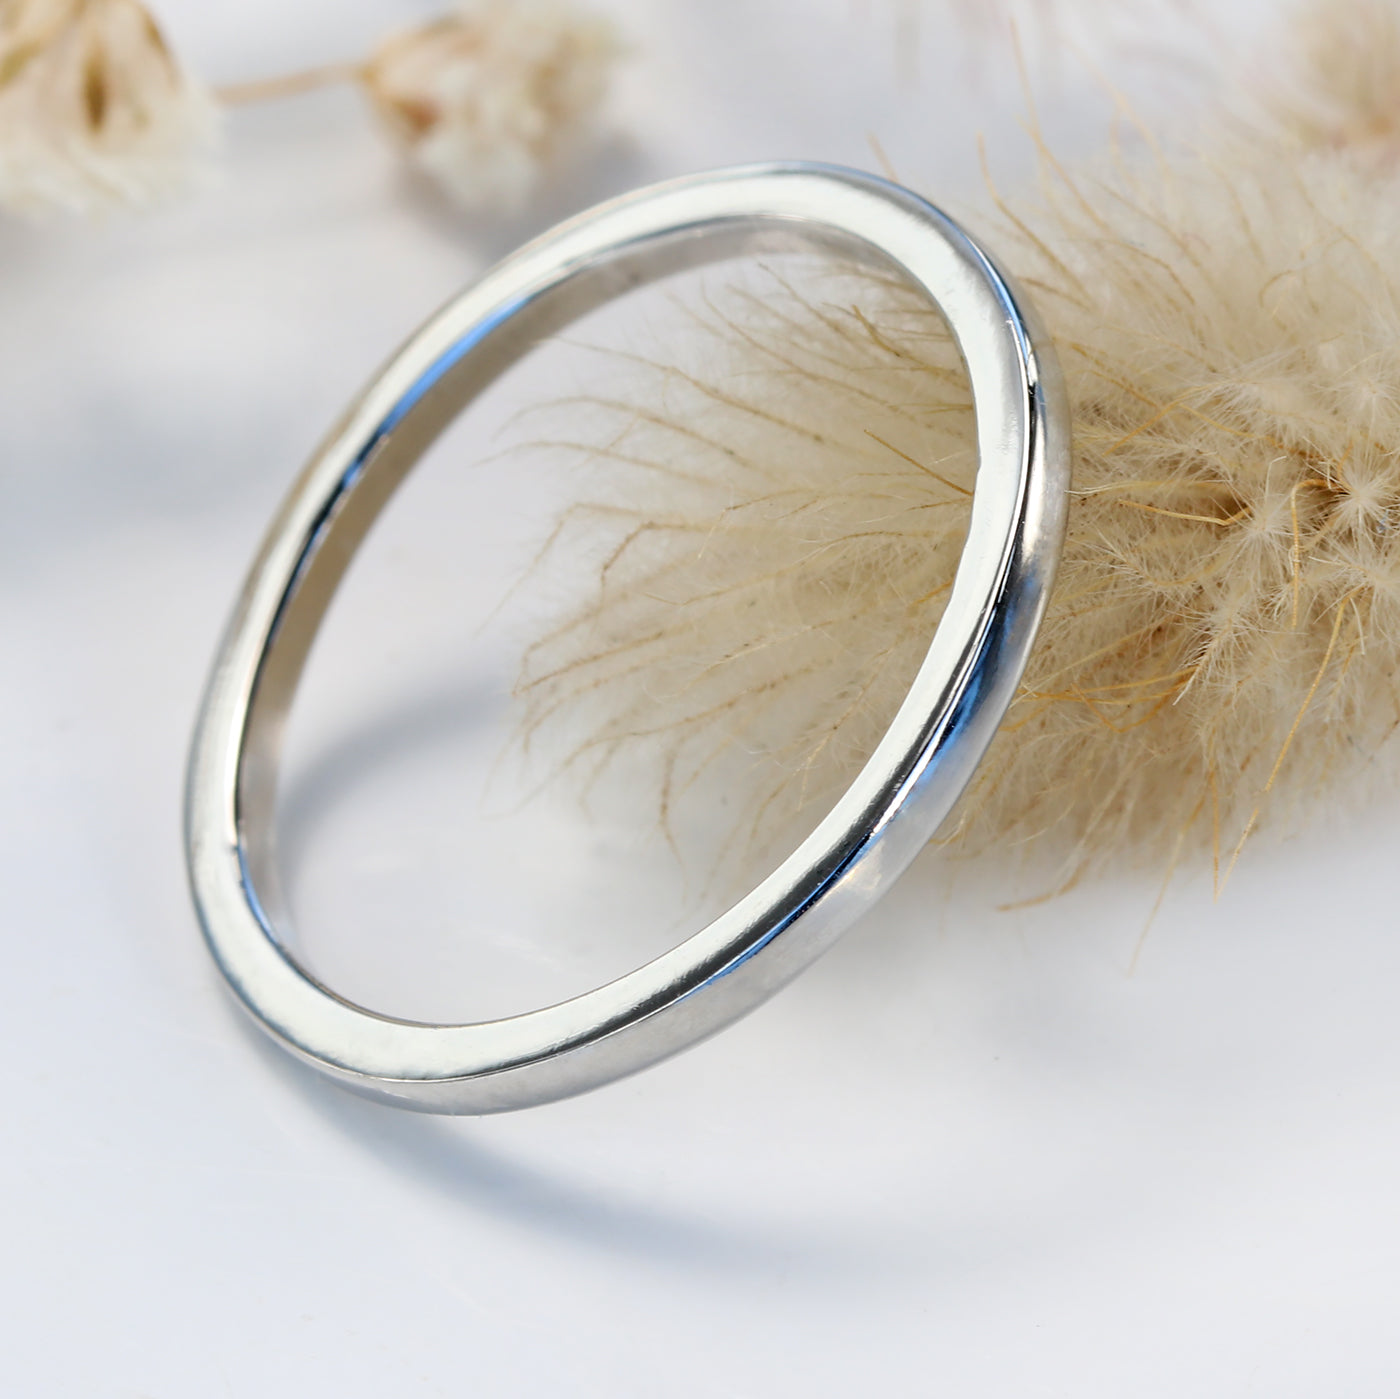 1.5mm Skinny Square Profile Platinum Wedding Ring